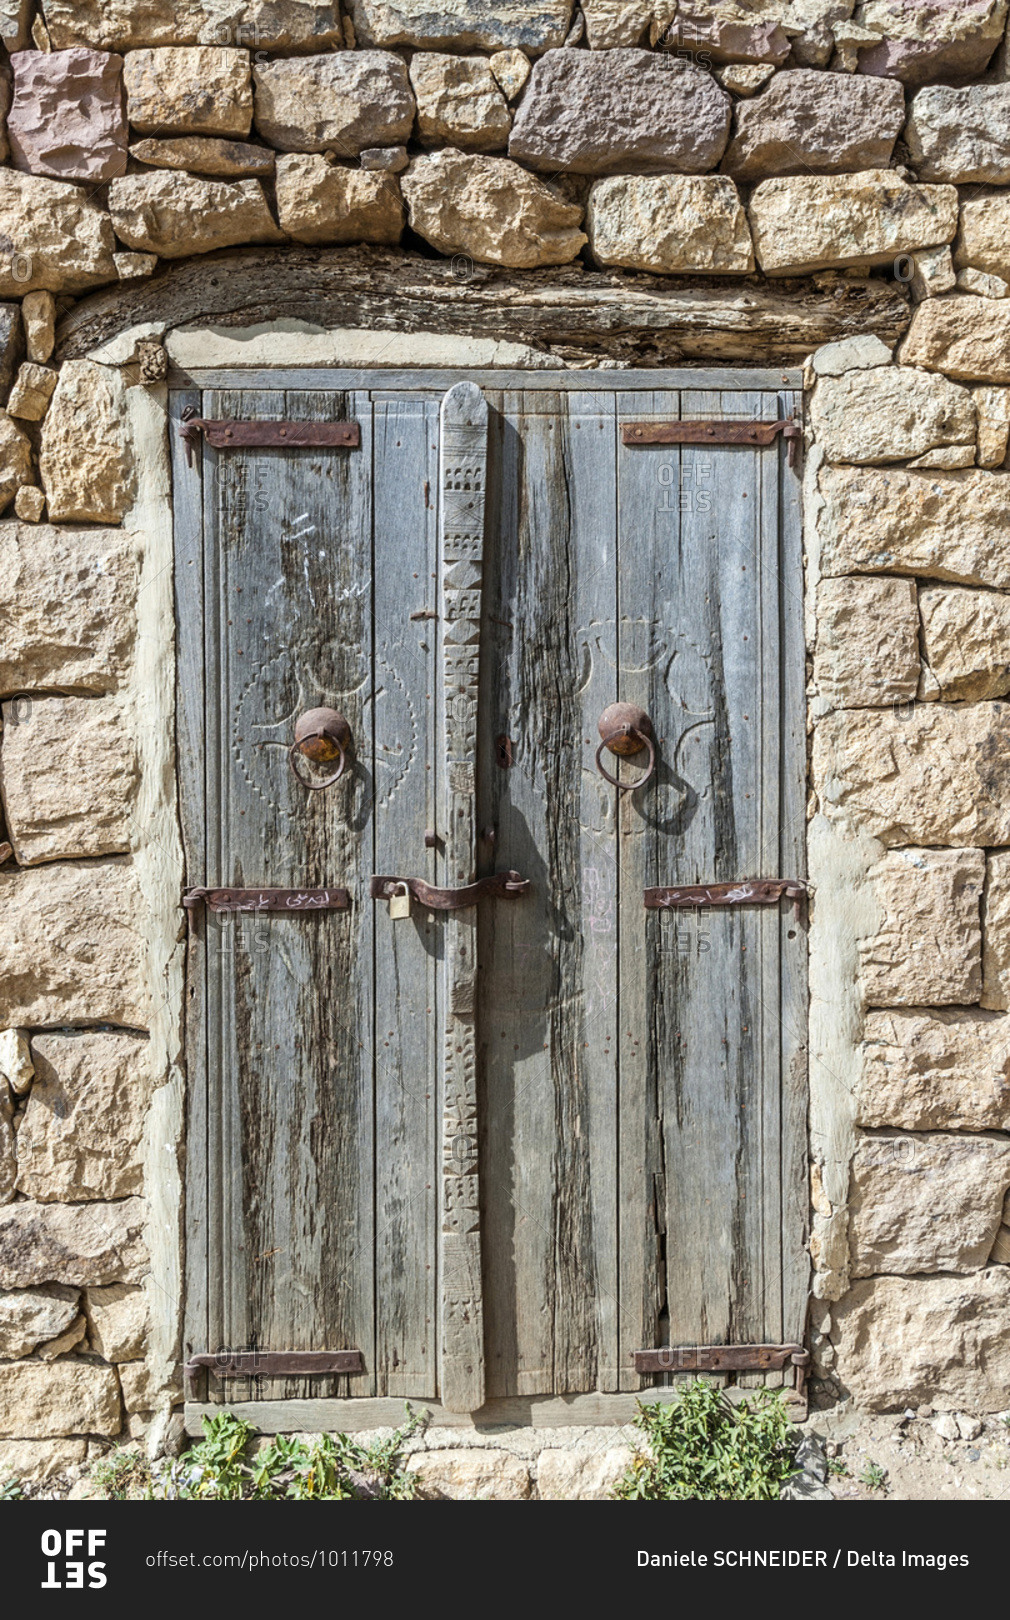 Middle East, Yemen, Centre West, Jebel Harraz region (UNESCO World Heritage Tentative list) door of a traditional rural house (shooting 03/2007)